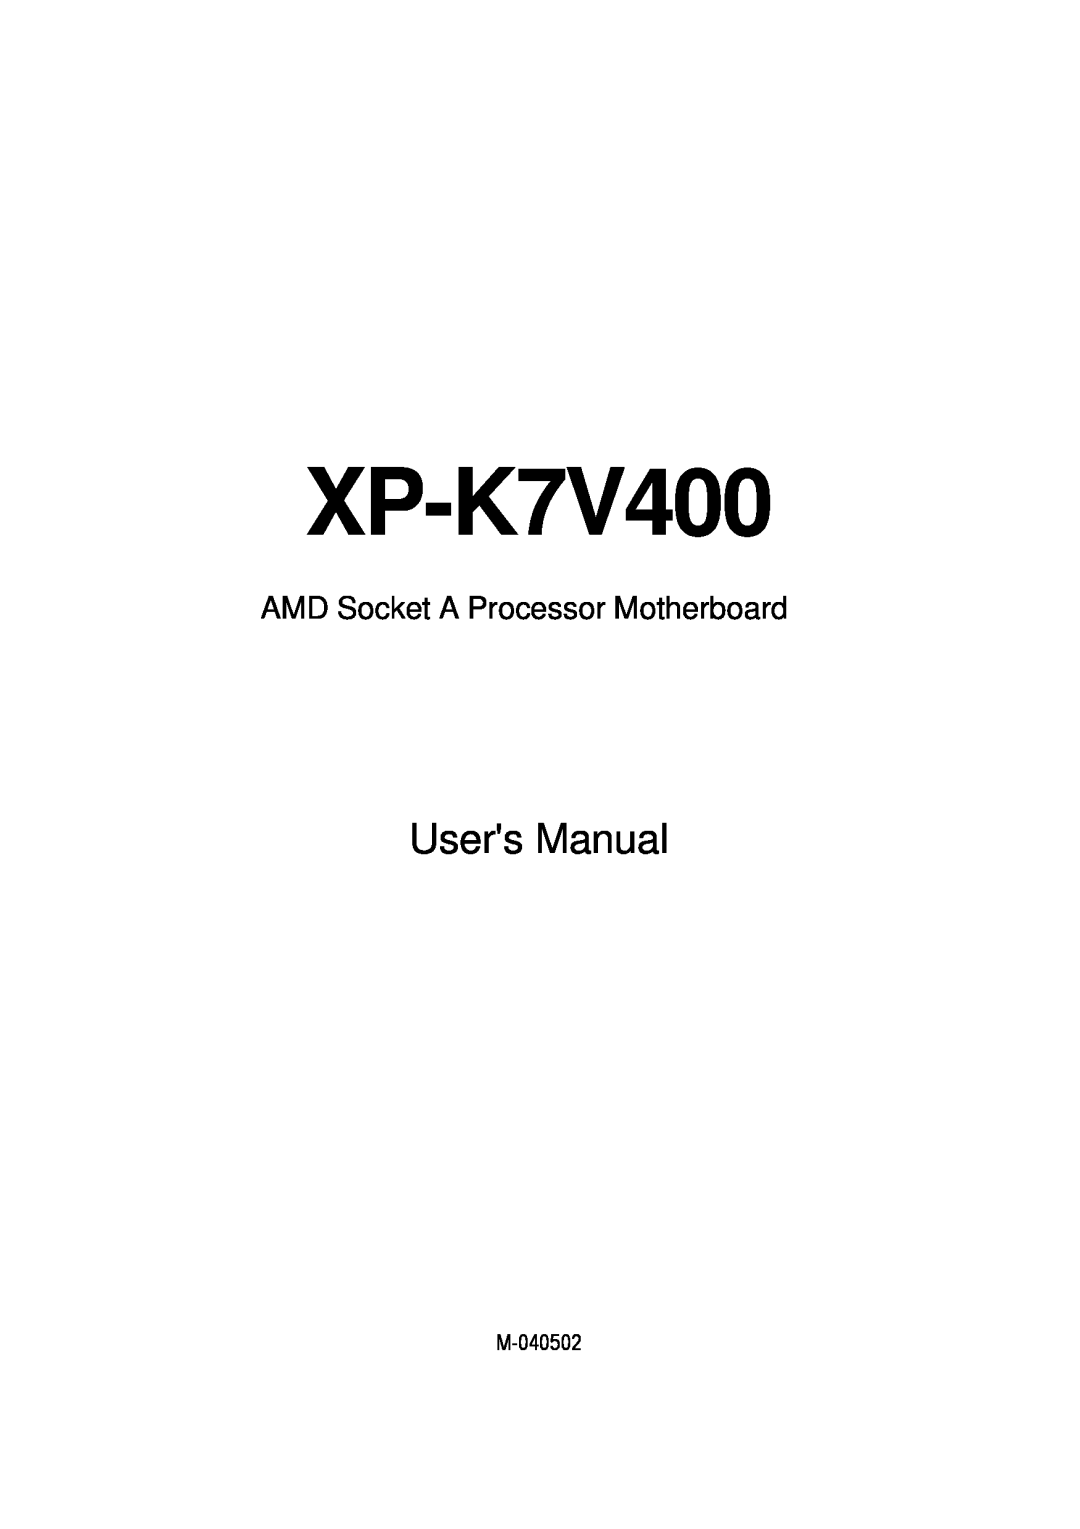 AMD XP-K7V400 user manual Users Manual, AMD Socket A Processor Motherboard 